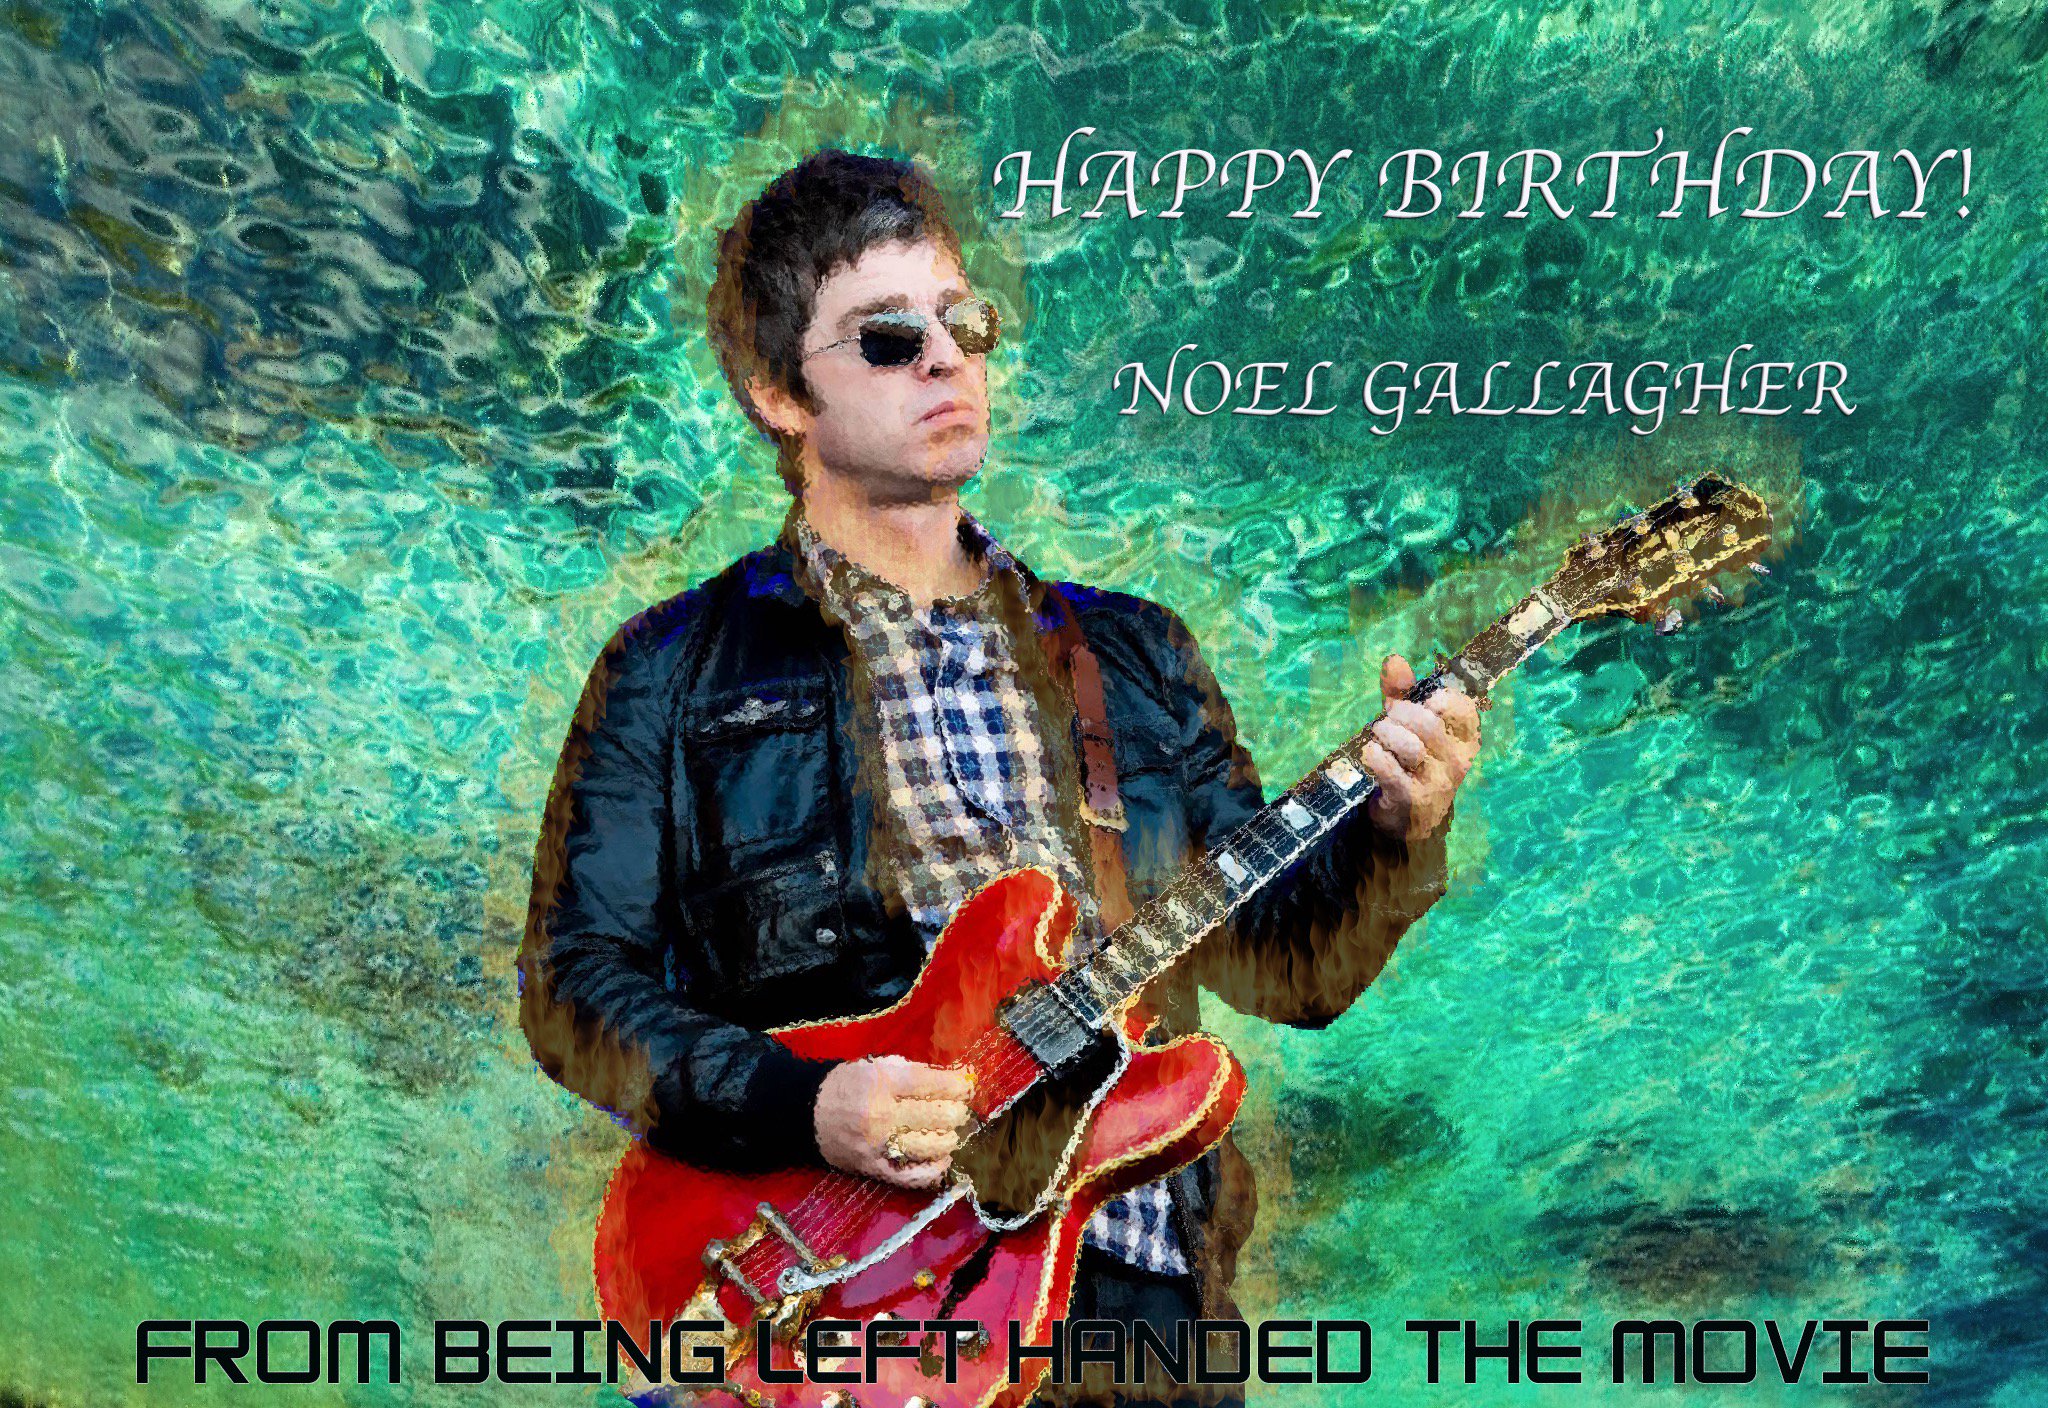 Wishing Noel Gallagher a Left-Handed Happy Birthday! 